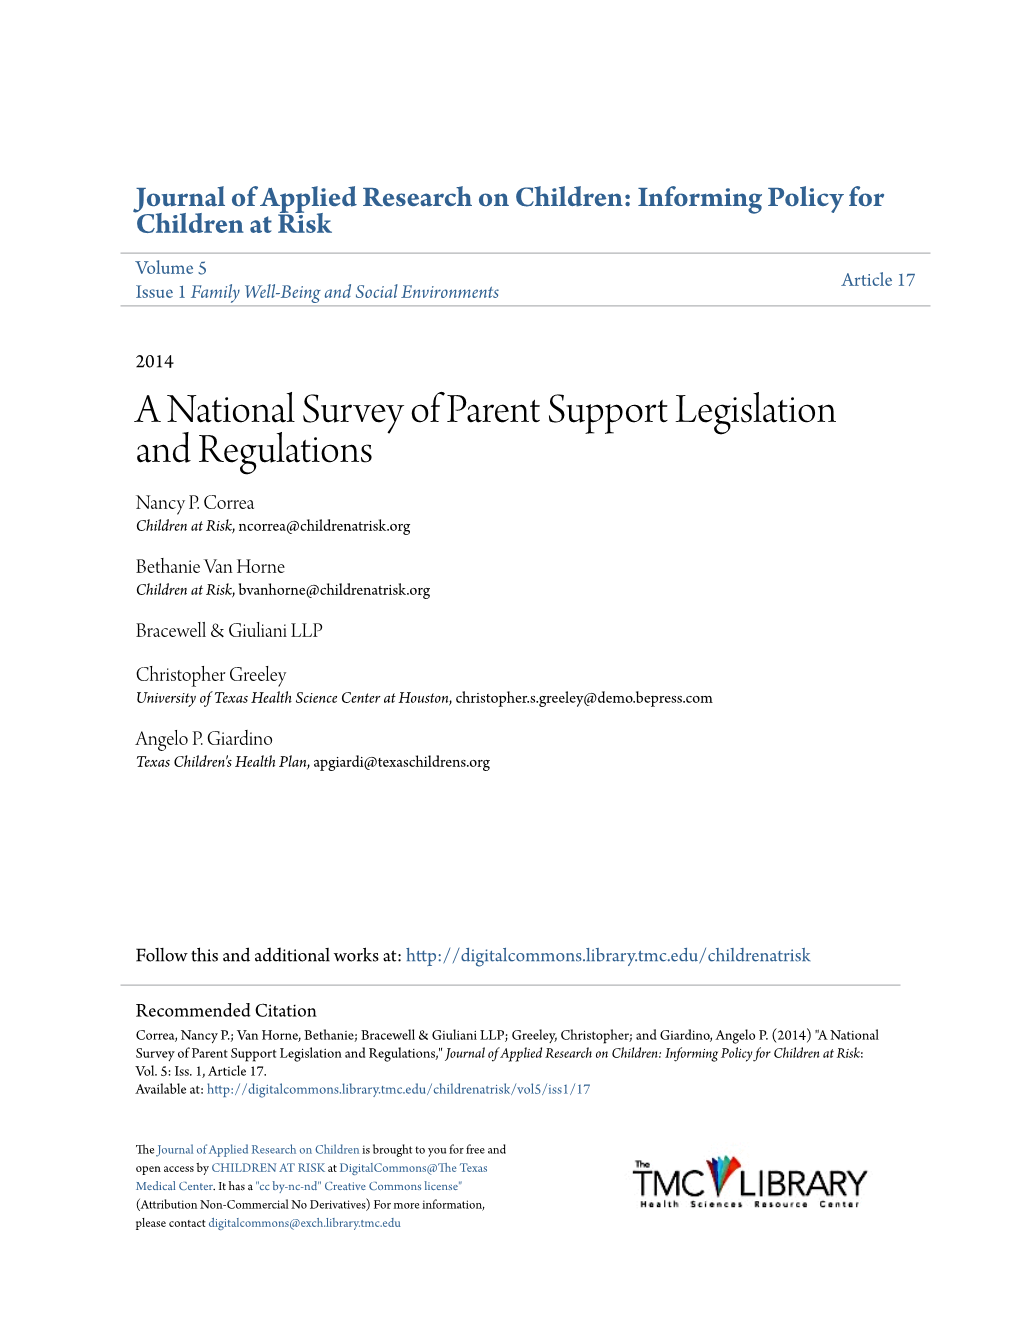 A National Survey of Parent Support Legislation and Regulations Nancy P